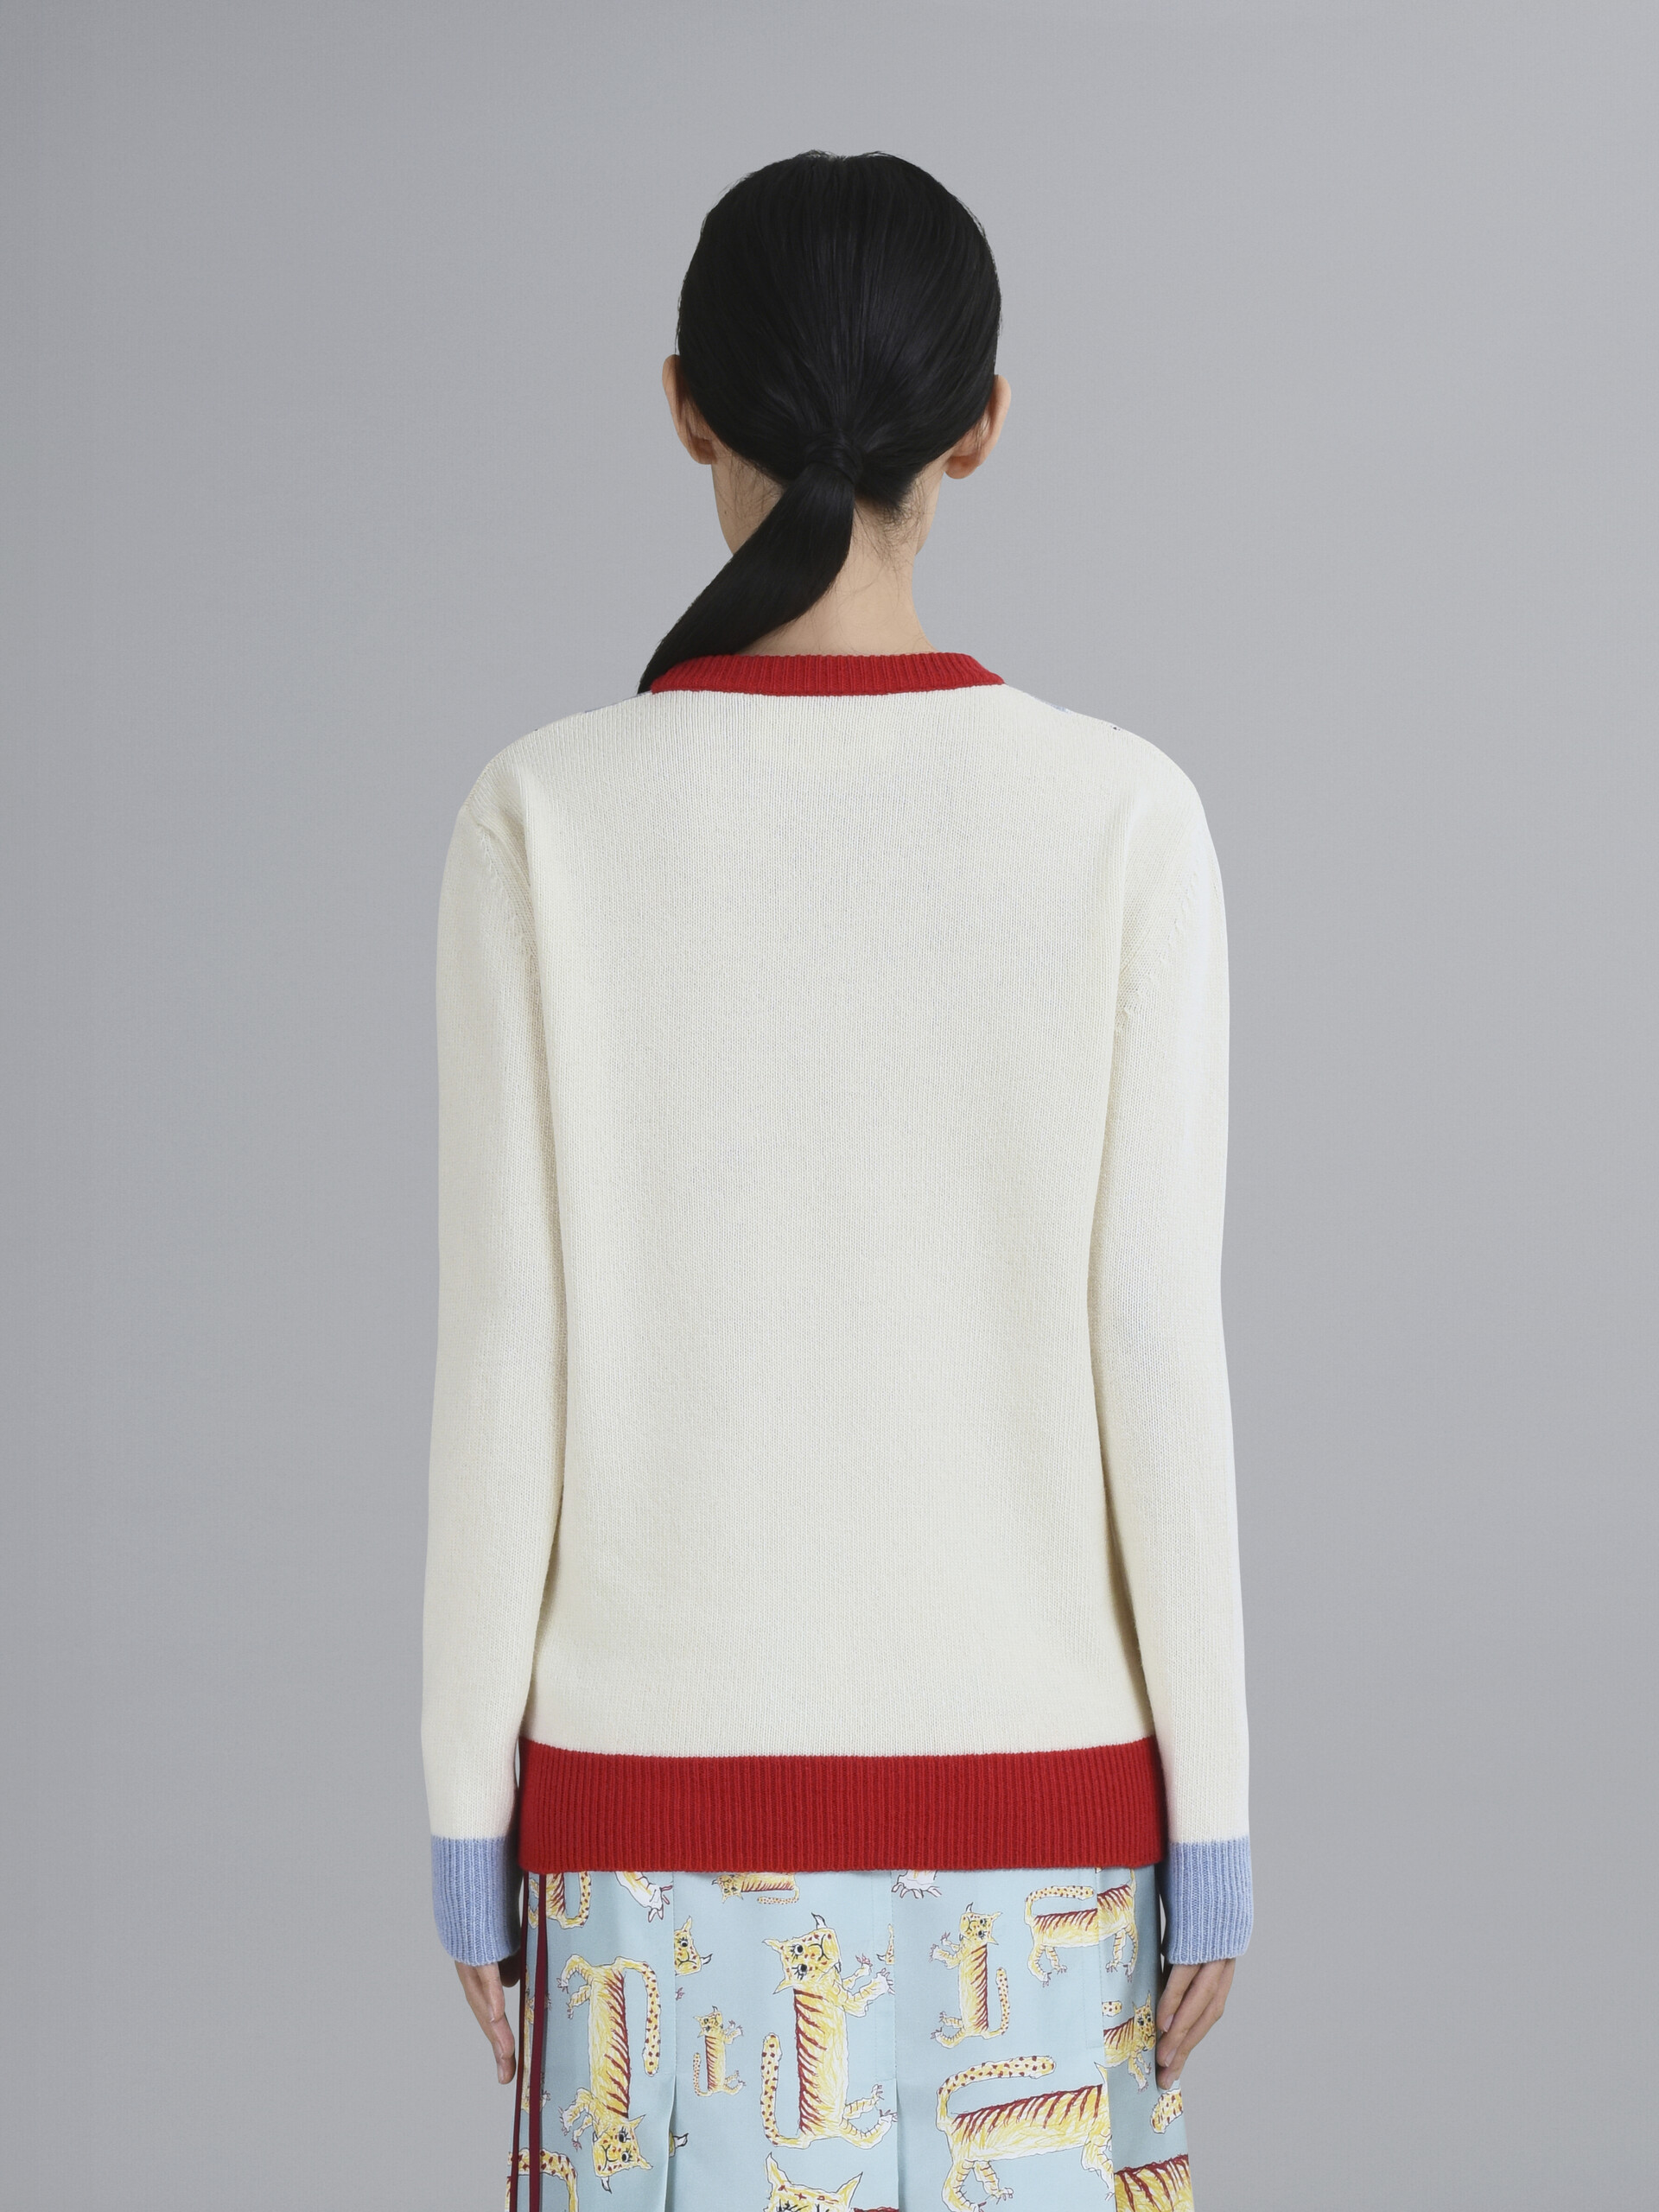 Shetland sweater with Naif Tiger Argyle motif | Marni